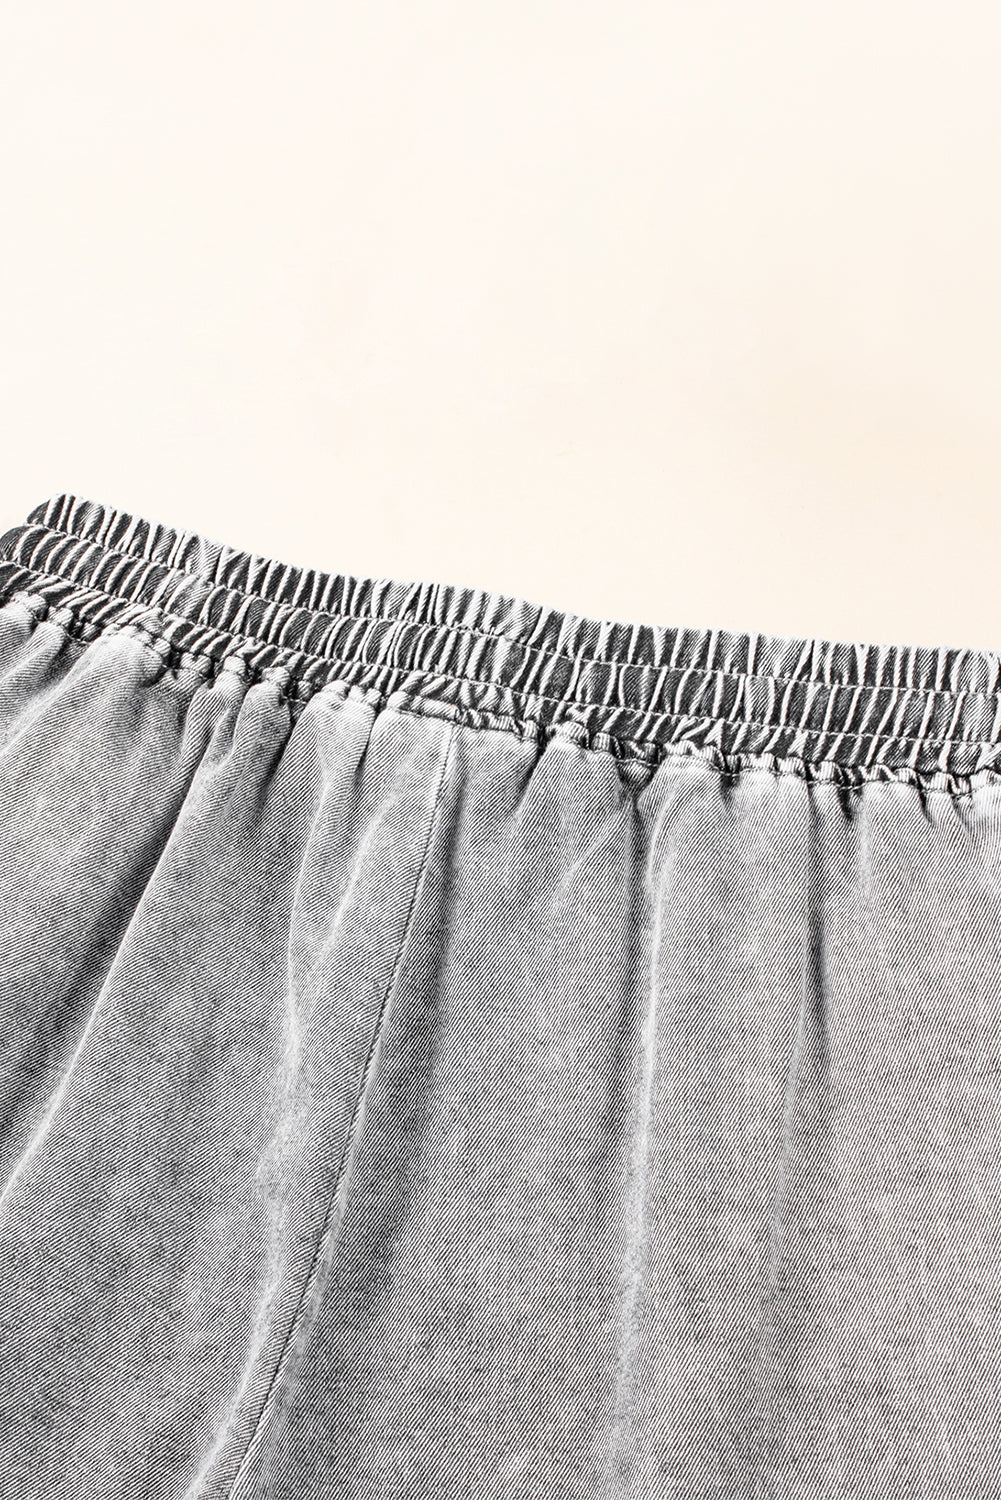 Medium Grey Drawstring Elastic Waist Wide Leg Jeans | Women’s Comfortable Casual Denim Pants